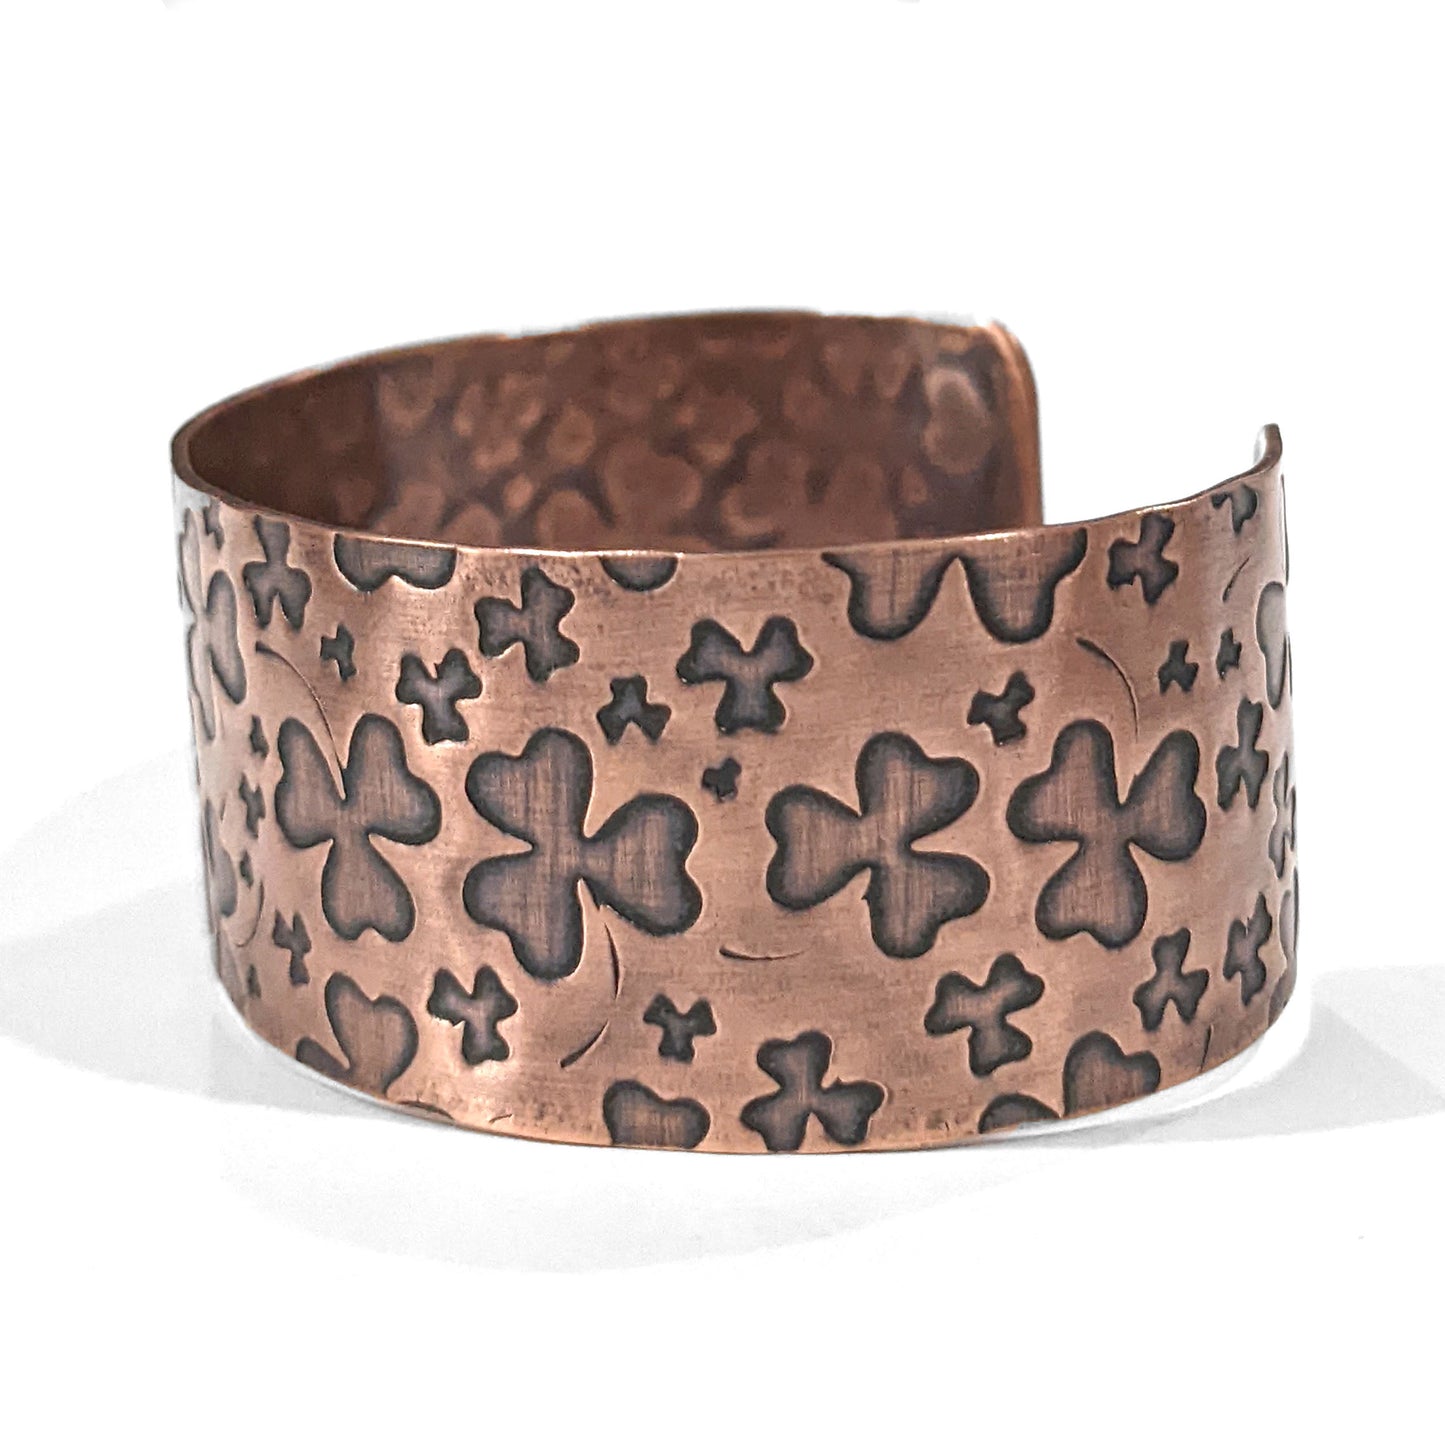 One inch wide copper cuff bracelet with impressions of shamrocks. 